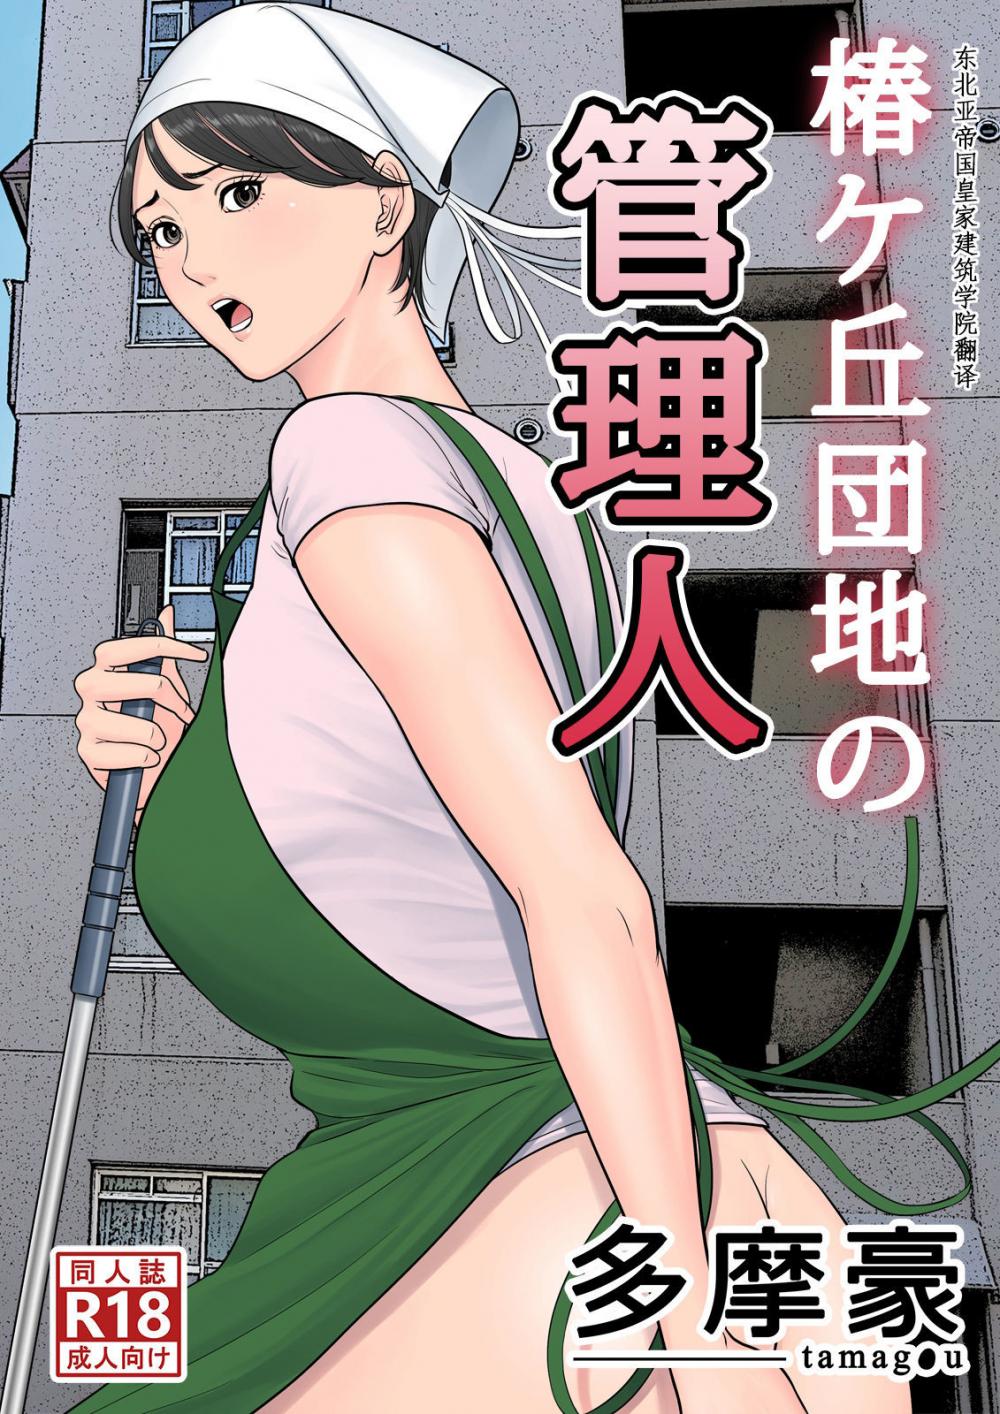 Hentai Manga Comic-Tsubakigaoka Housing Project Manager-Chapter 1-1